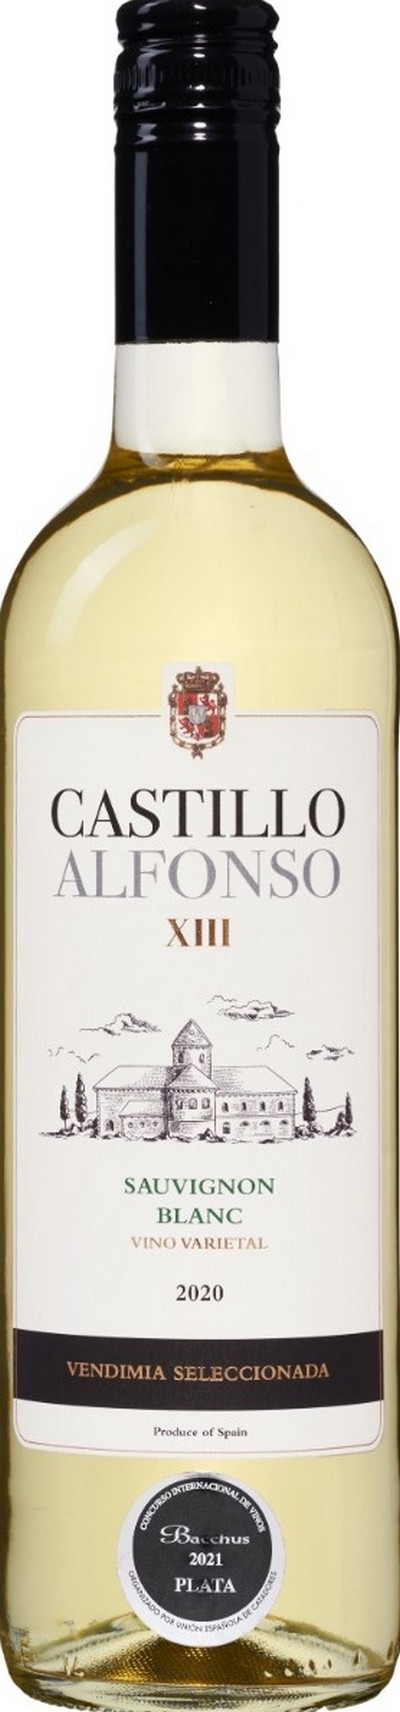 castillo-alfonso-xiii-sauvignon-blanc-vino-varietal-2020